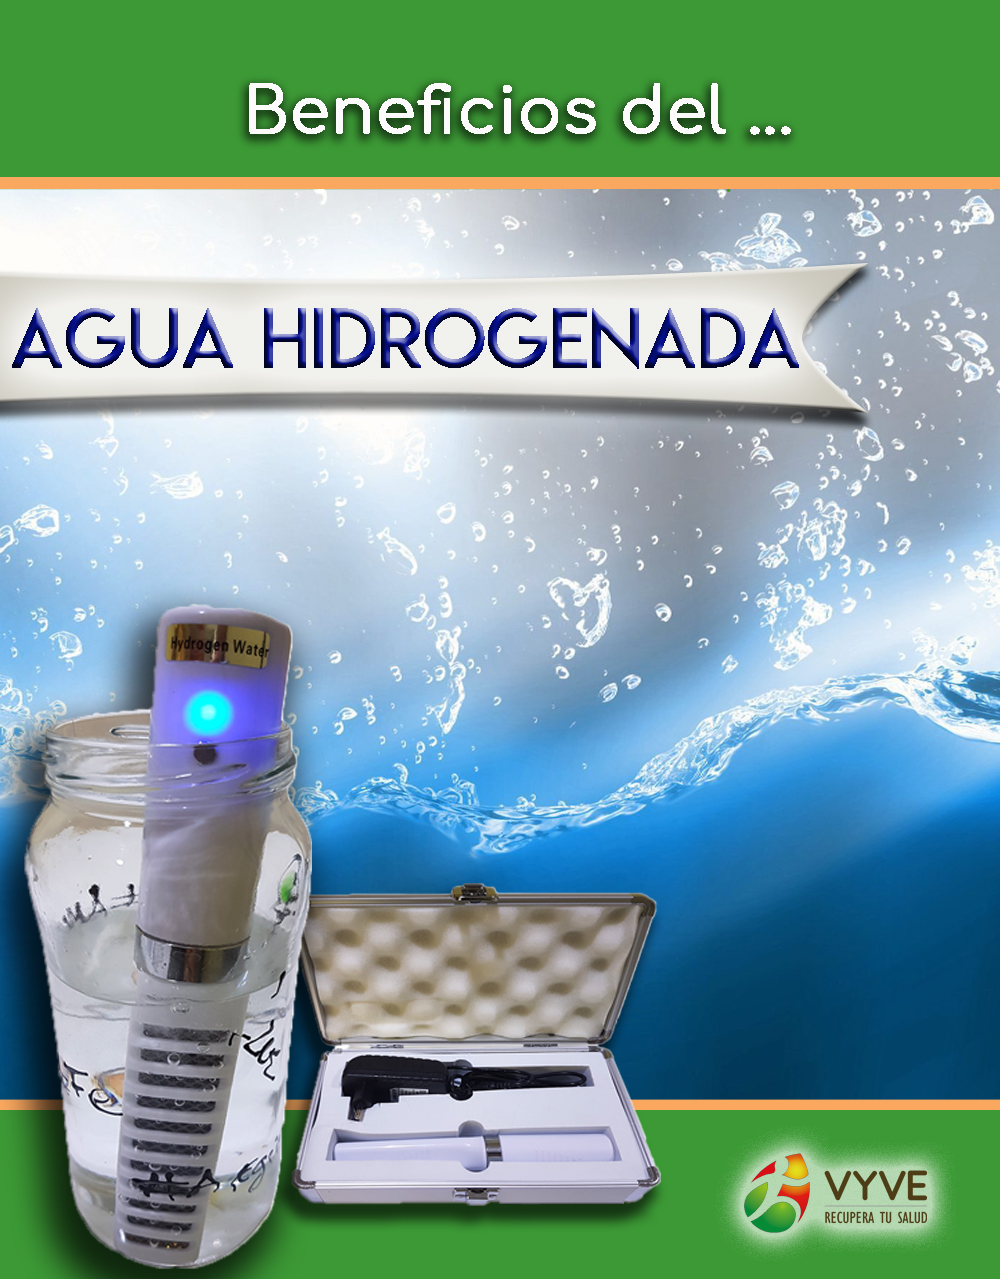 Beneficio del Agua Hidrogenada. Hydrogen. Agua Hidrogenada.